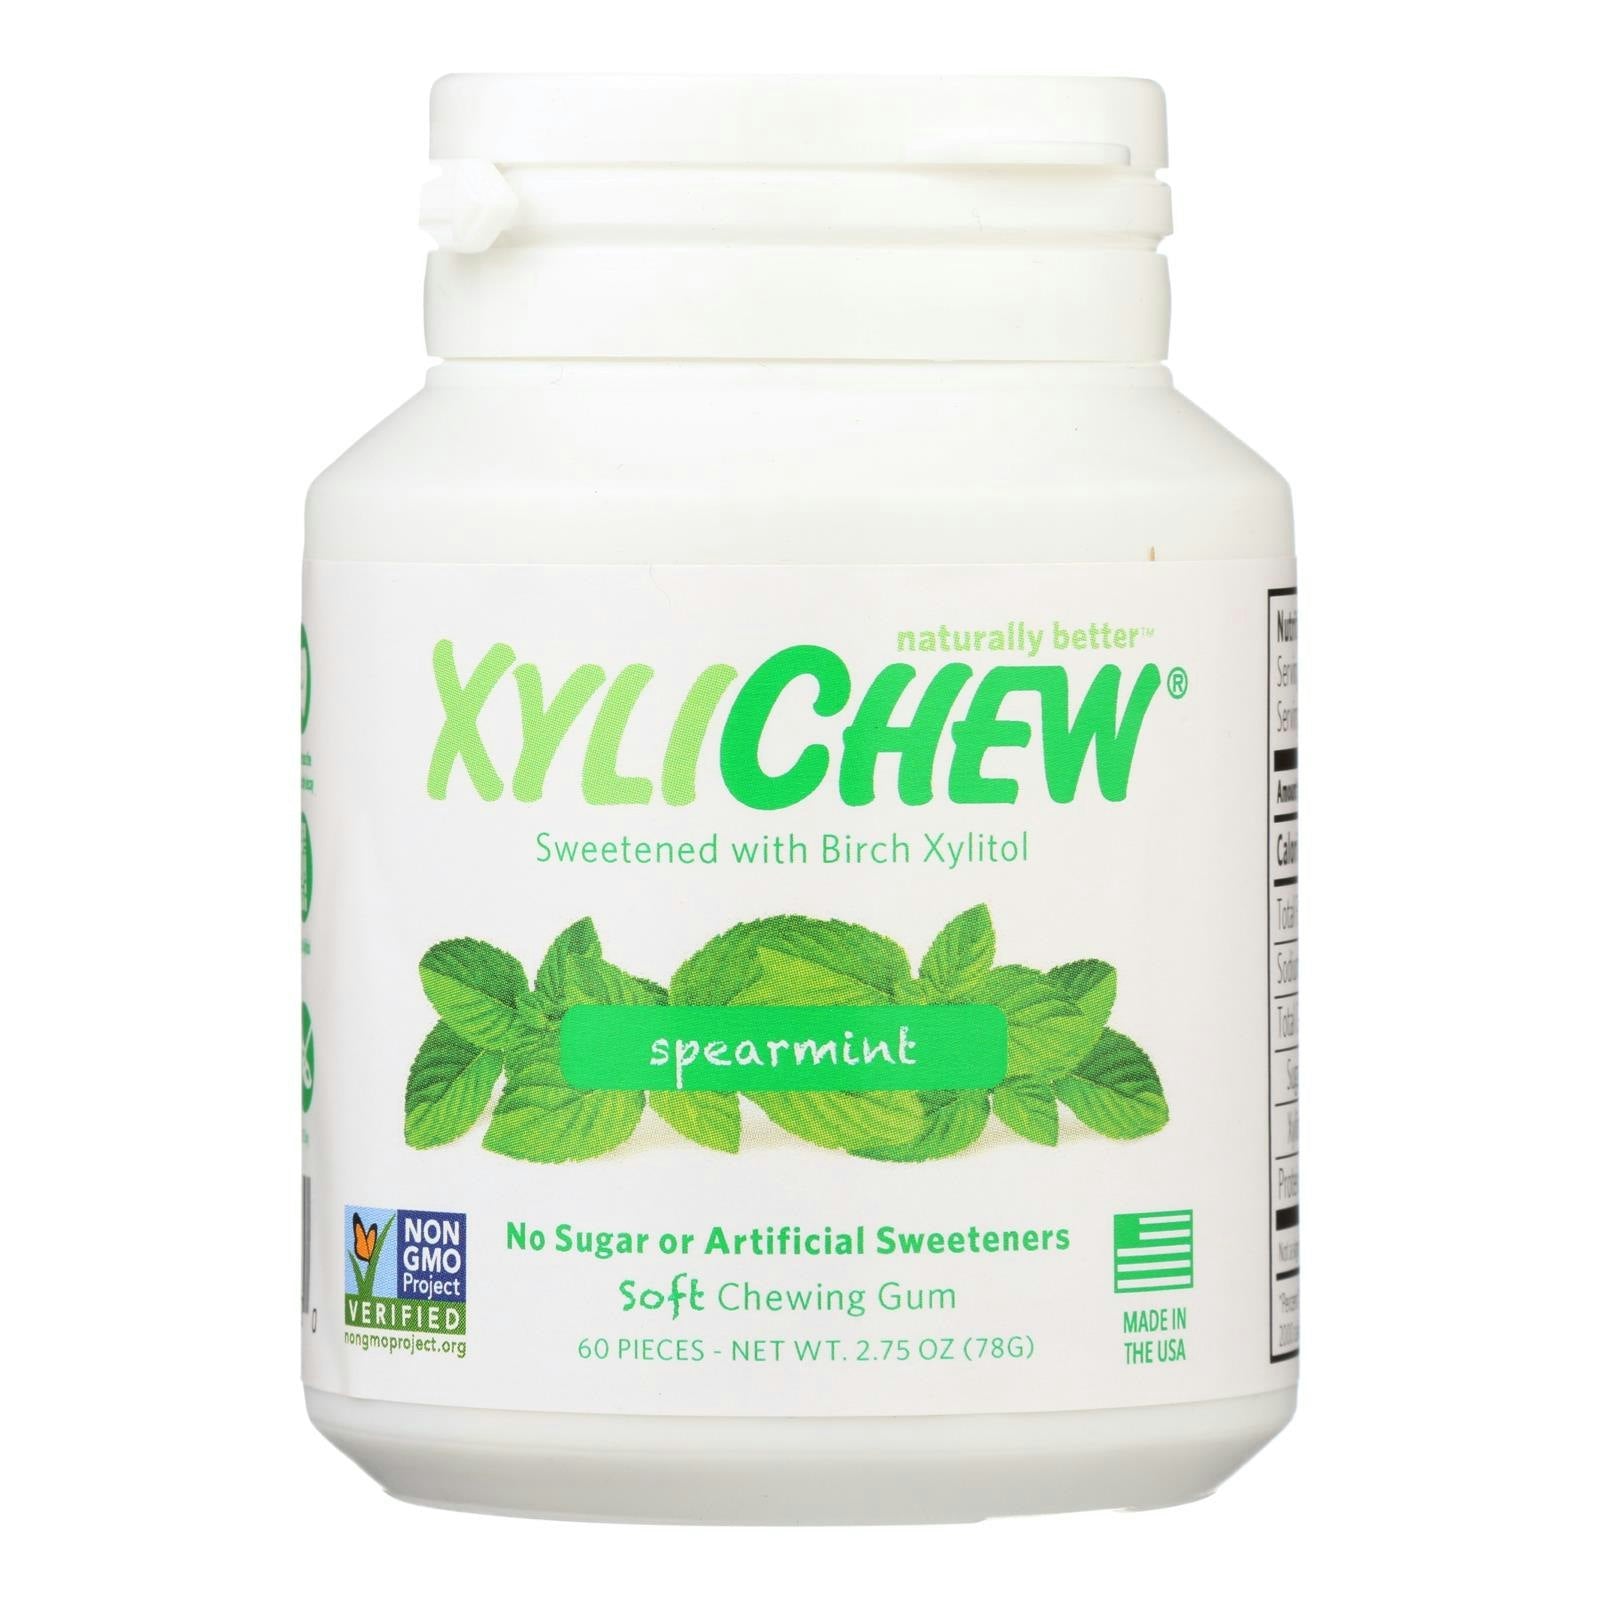 XyliChew Chewing Gum - Sugar Free Spearmint - 60 Piece Jar (Pack of 4)